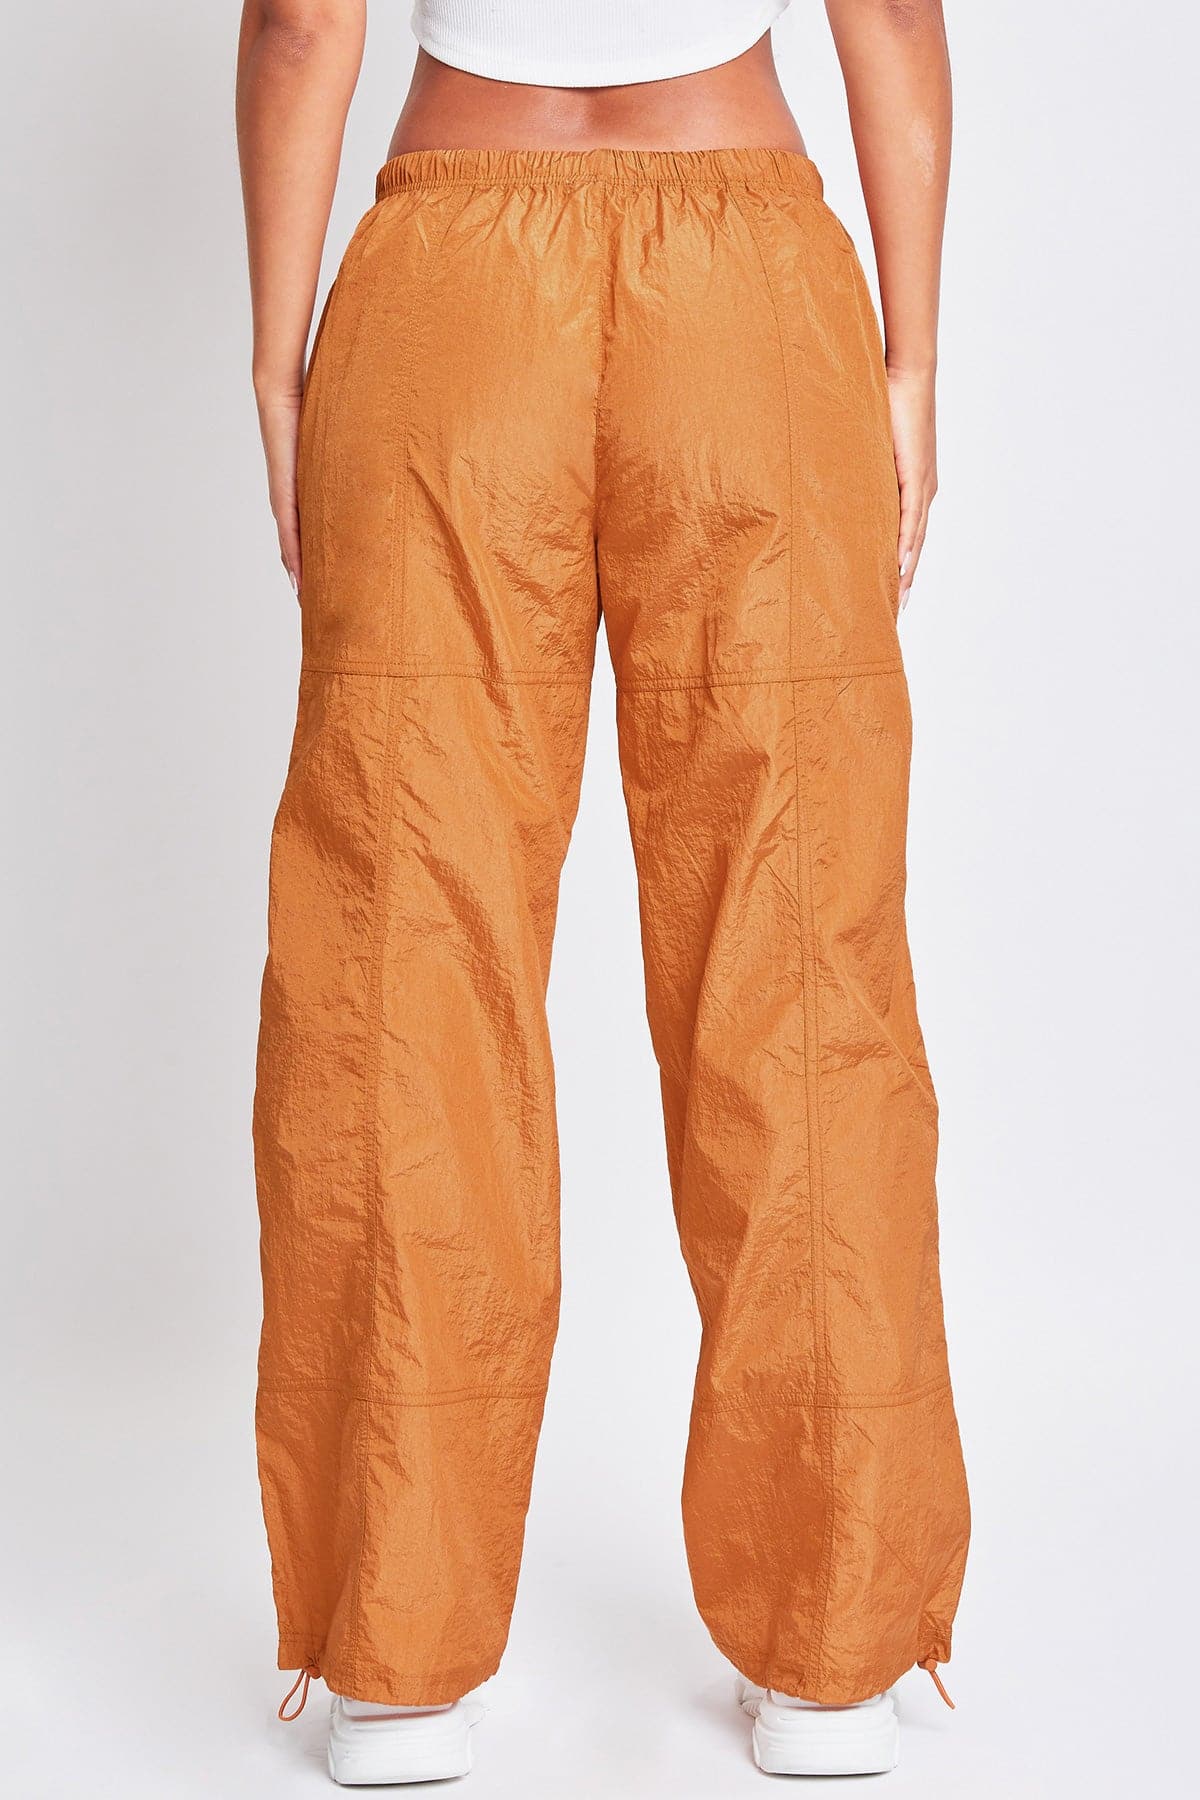 Women's Pull-On Nylon Parachute Pants